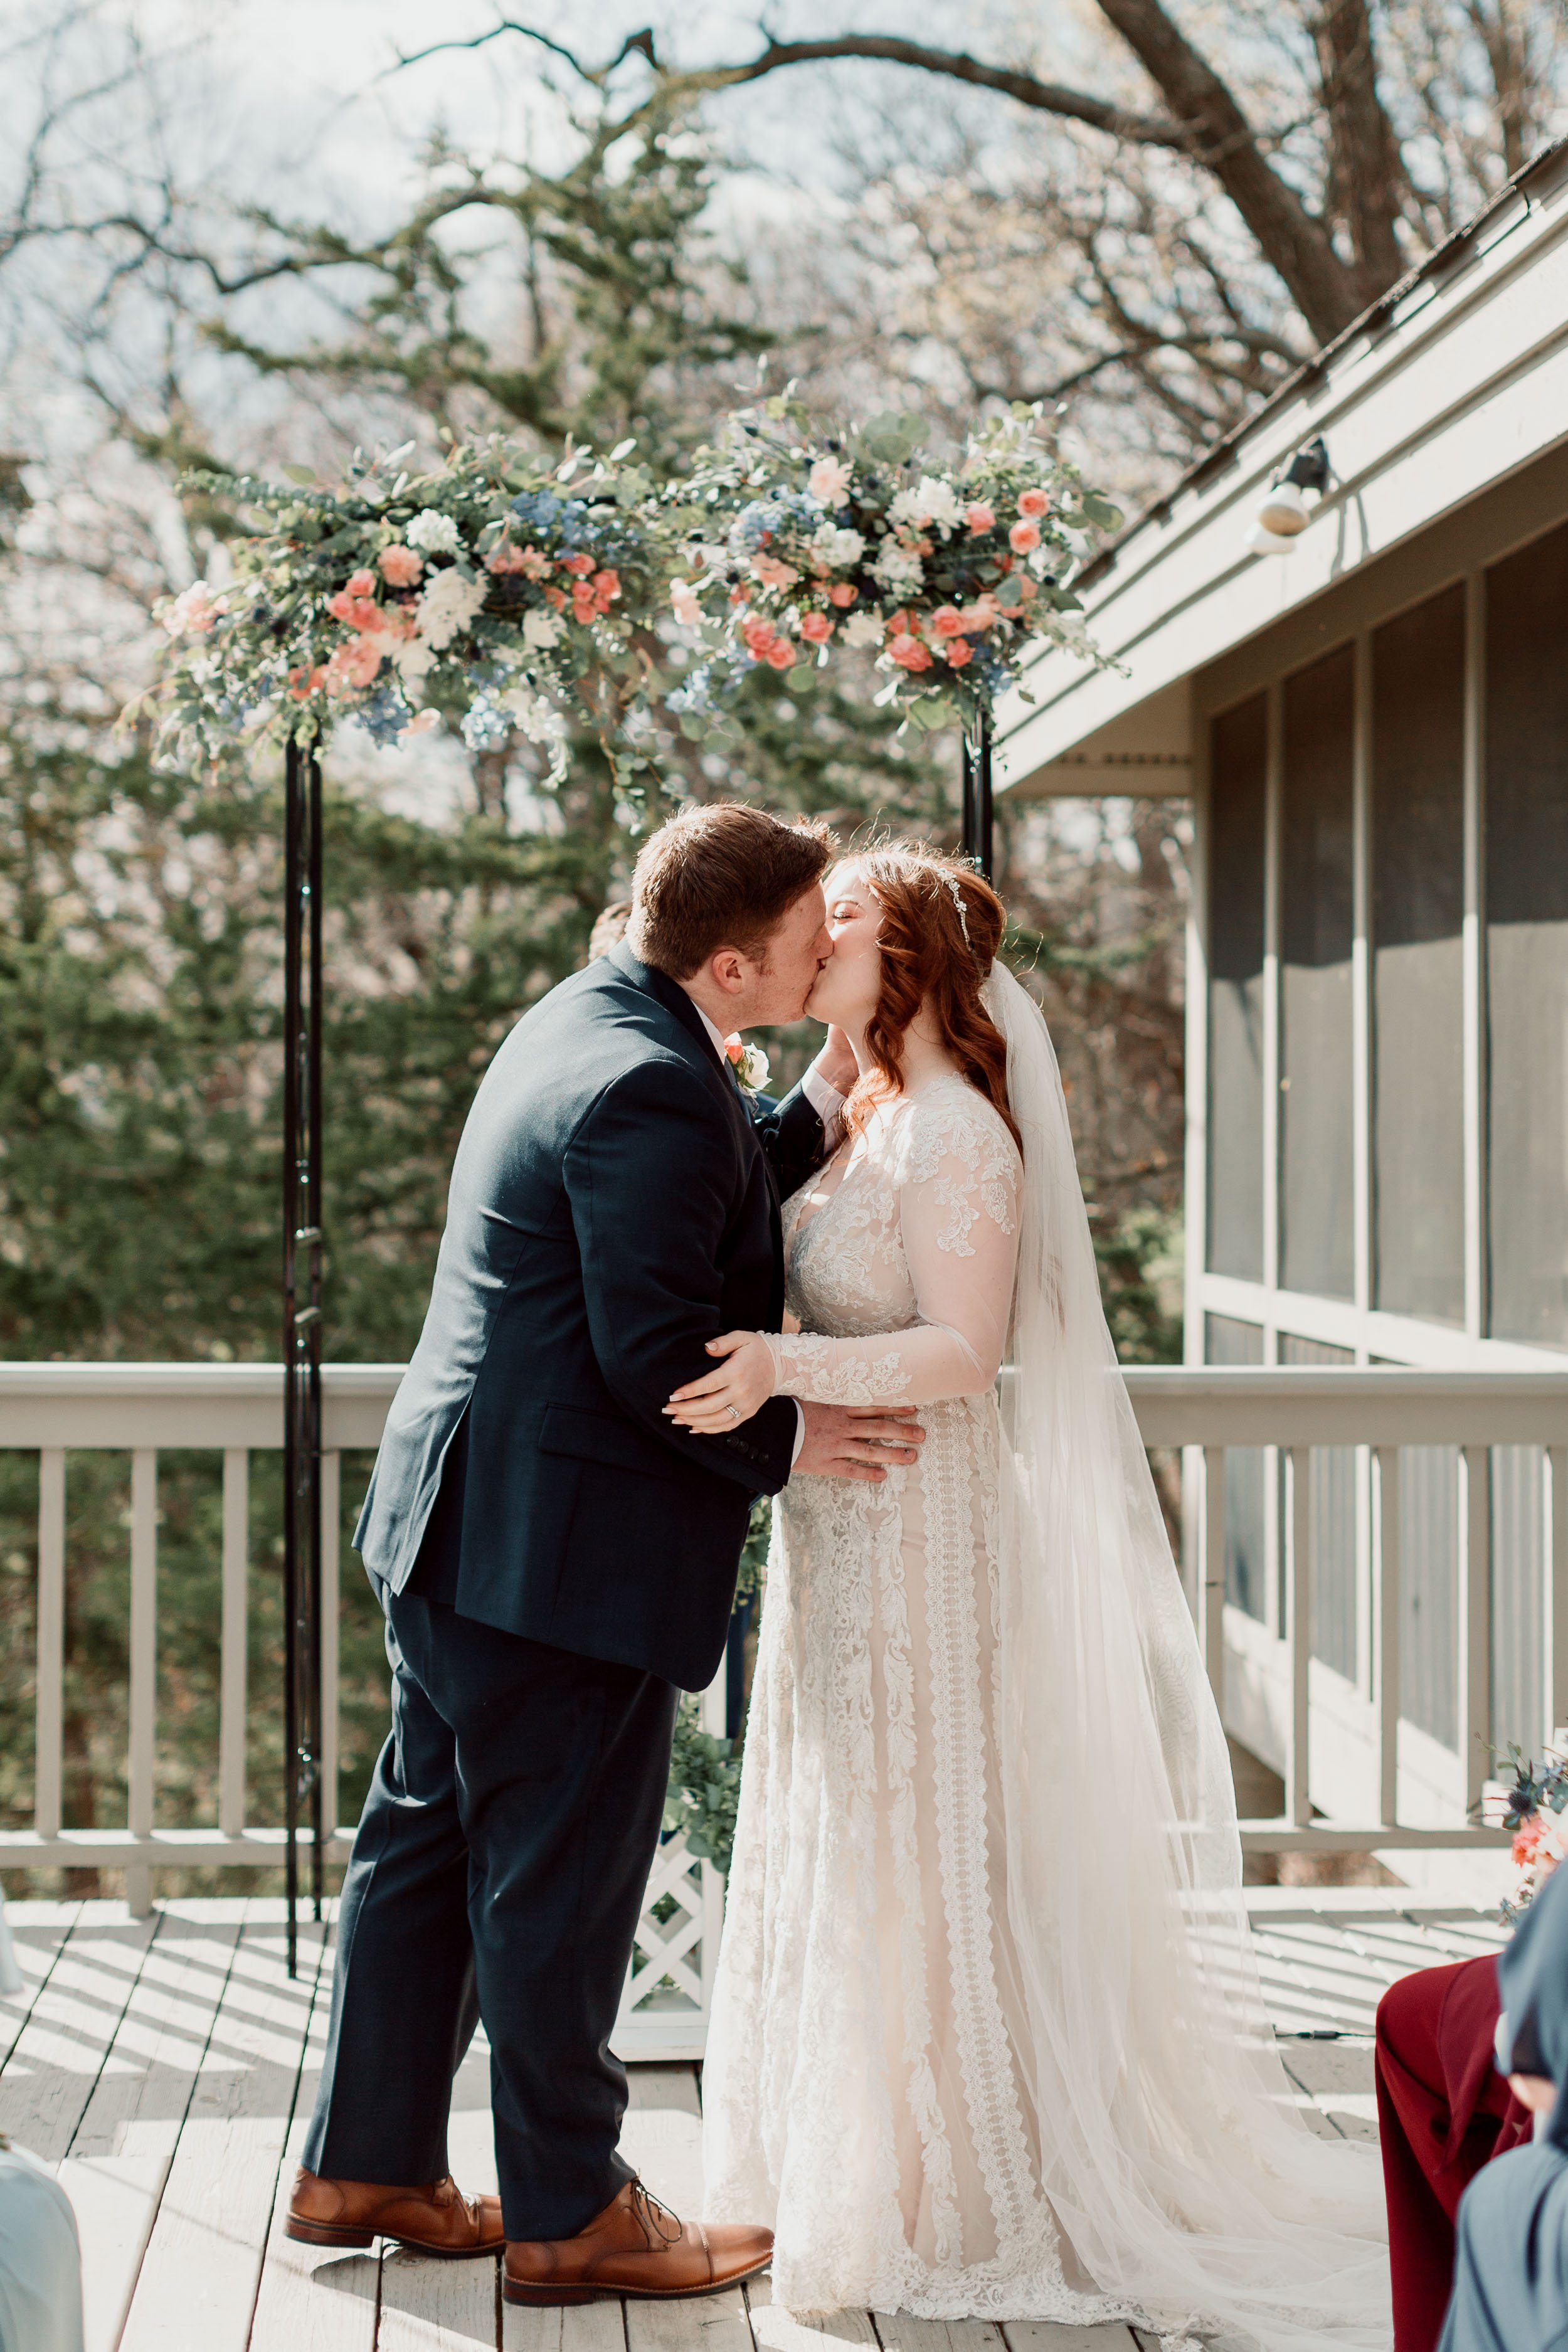 First kiss under floral wedding arch